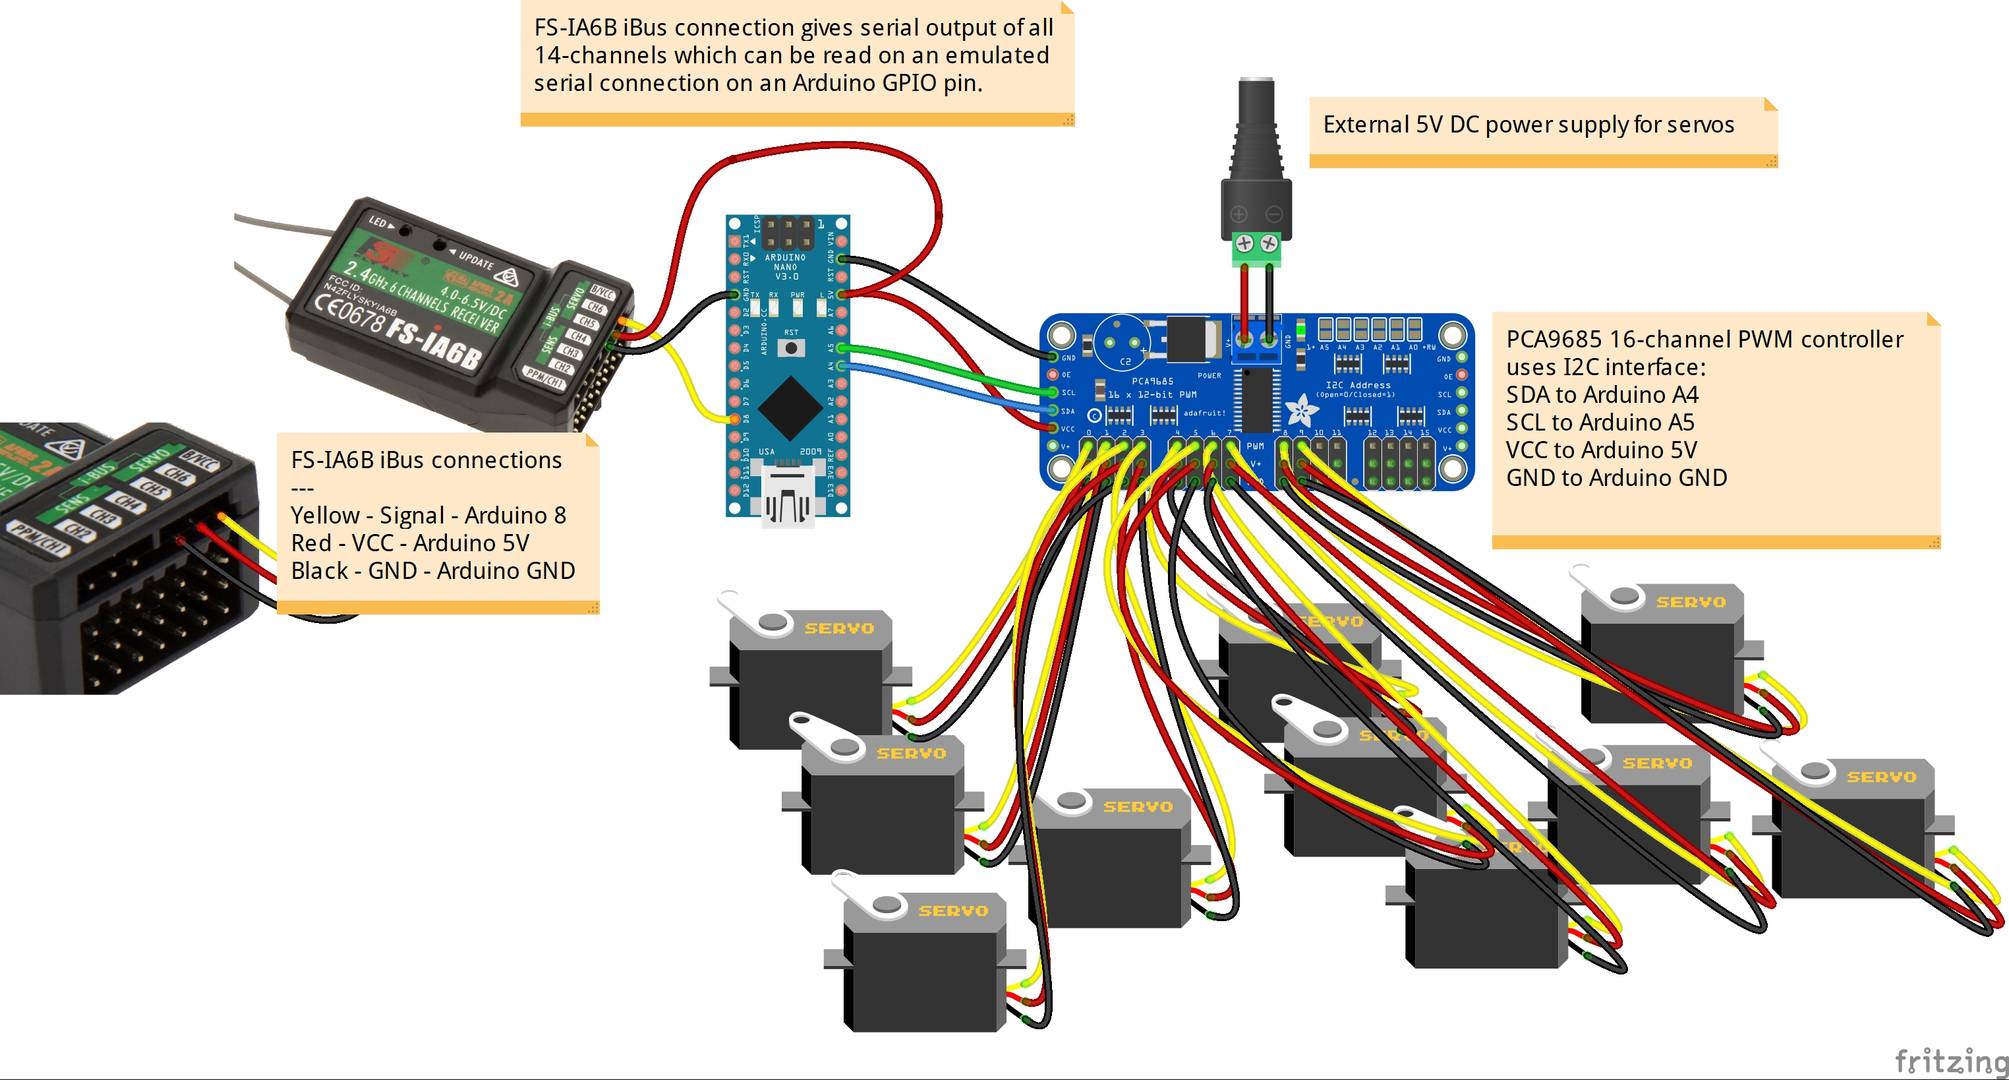 Let Arduino talk with car through OBD-II - Project Guidance - Arduino Forum